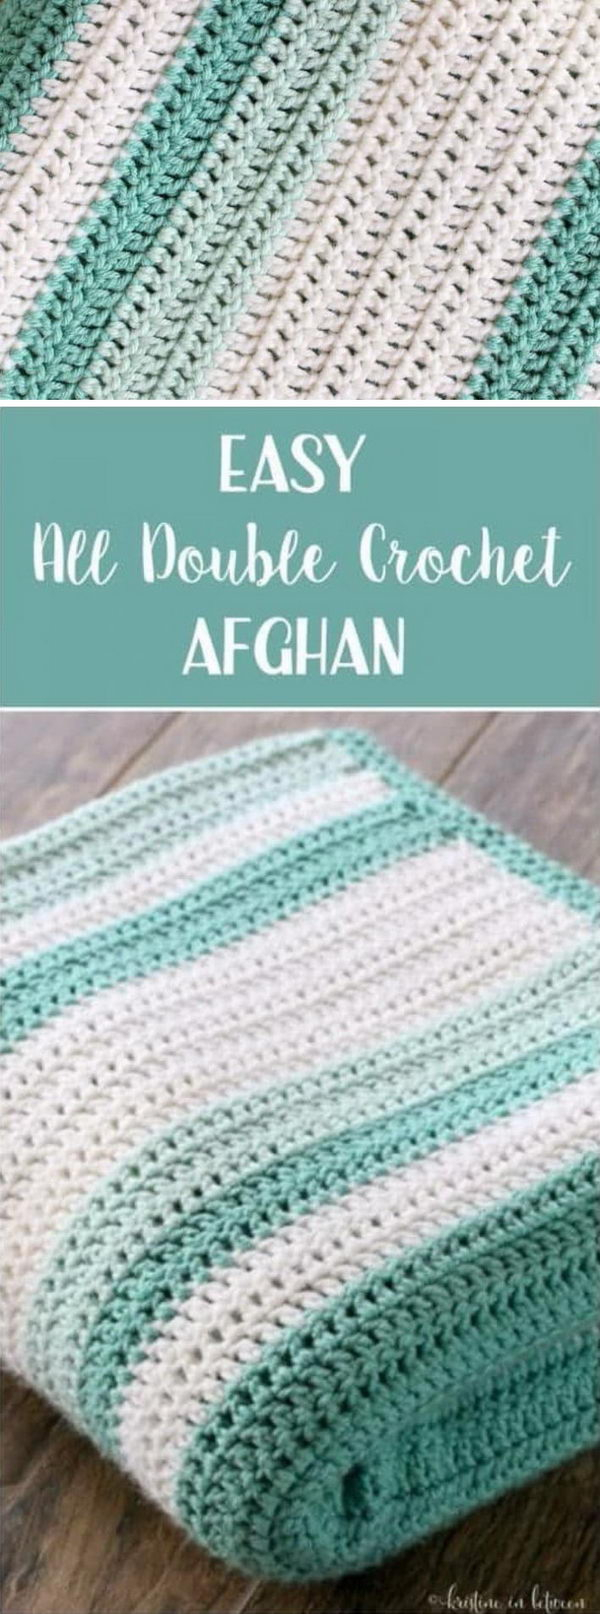 Easy Afghan Crochet Pattern 30 Free Crochet Patterns For Blankets Hative